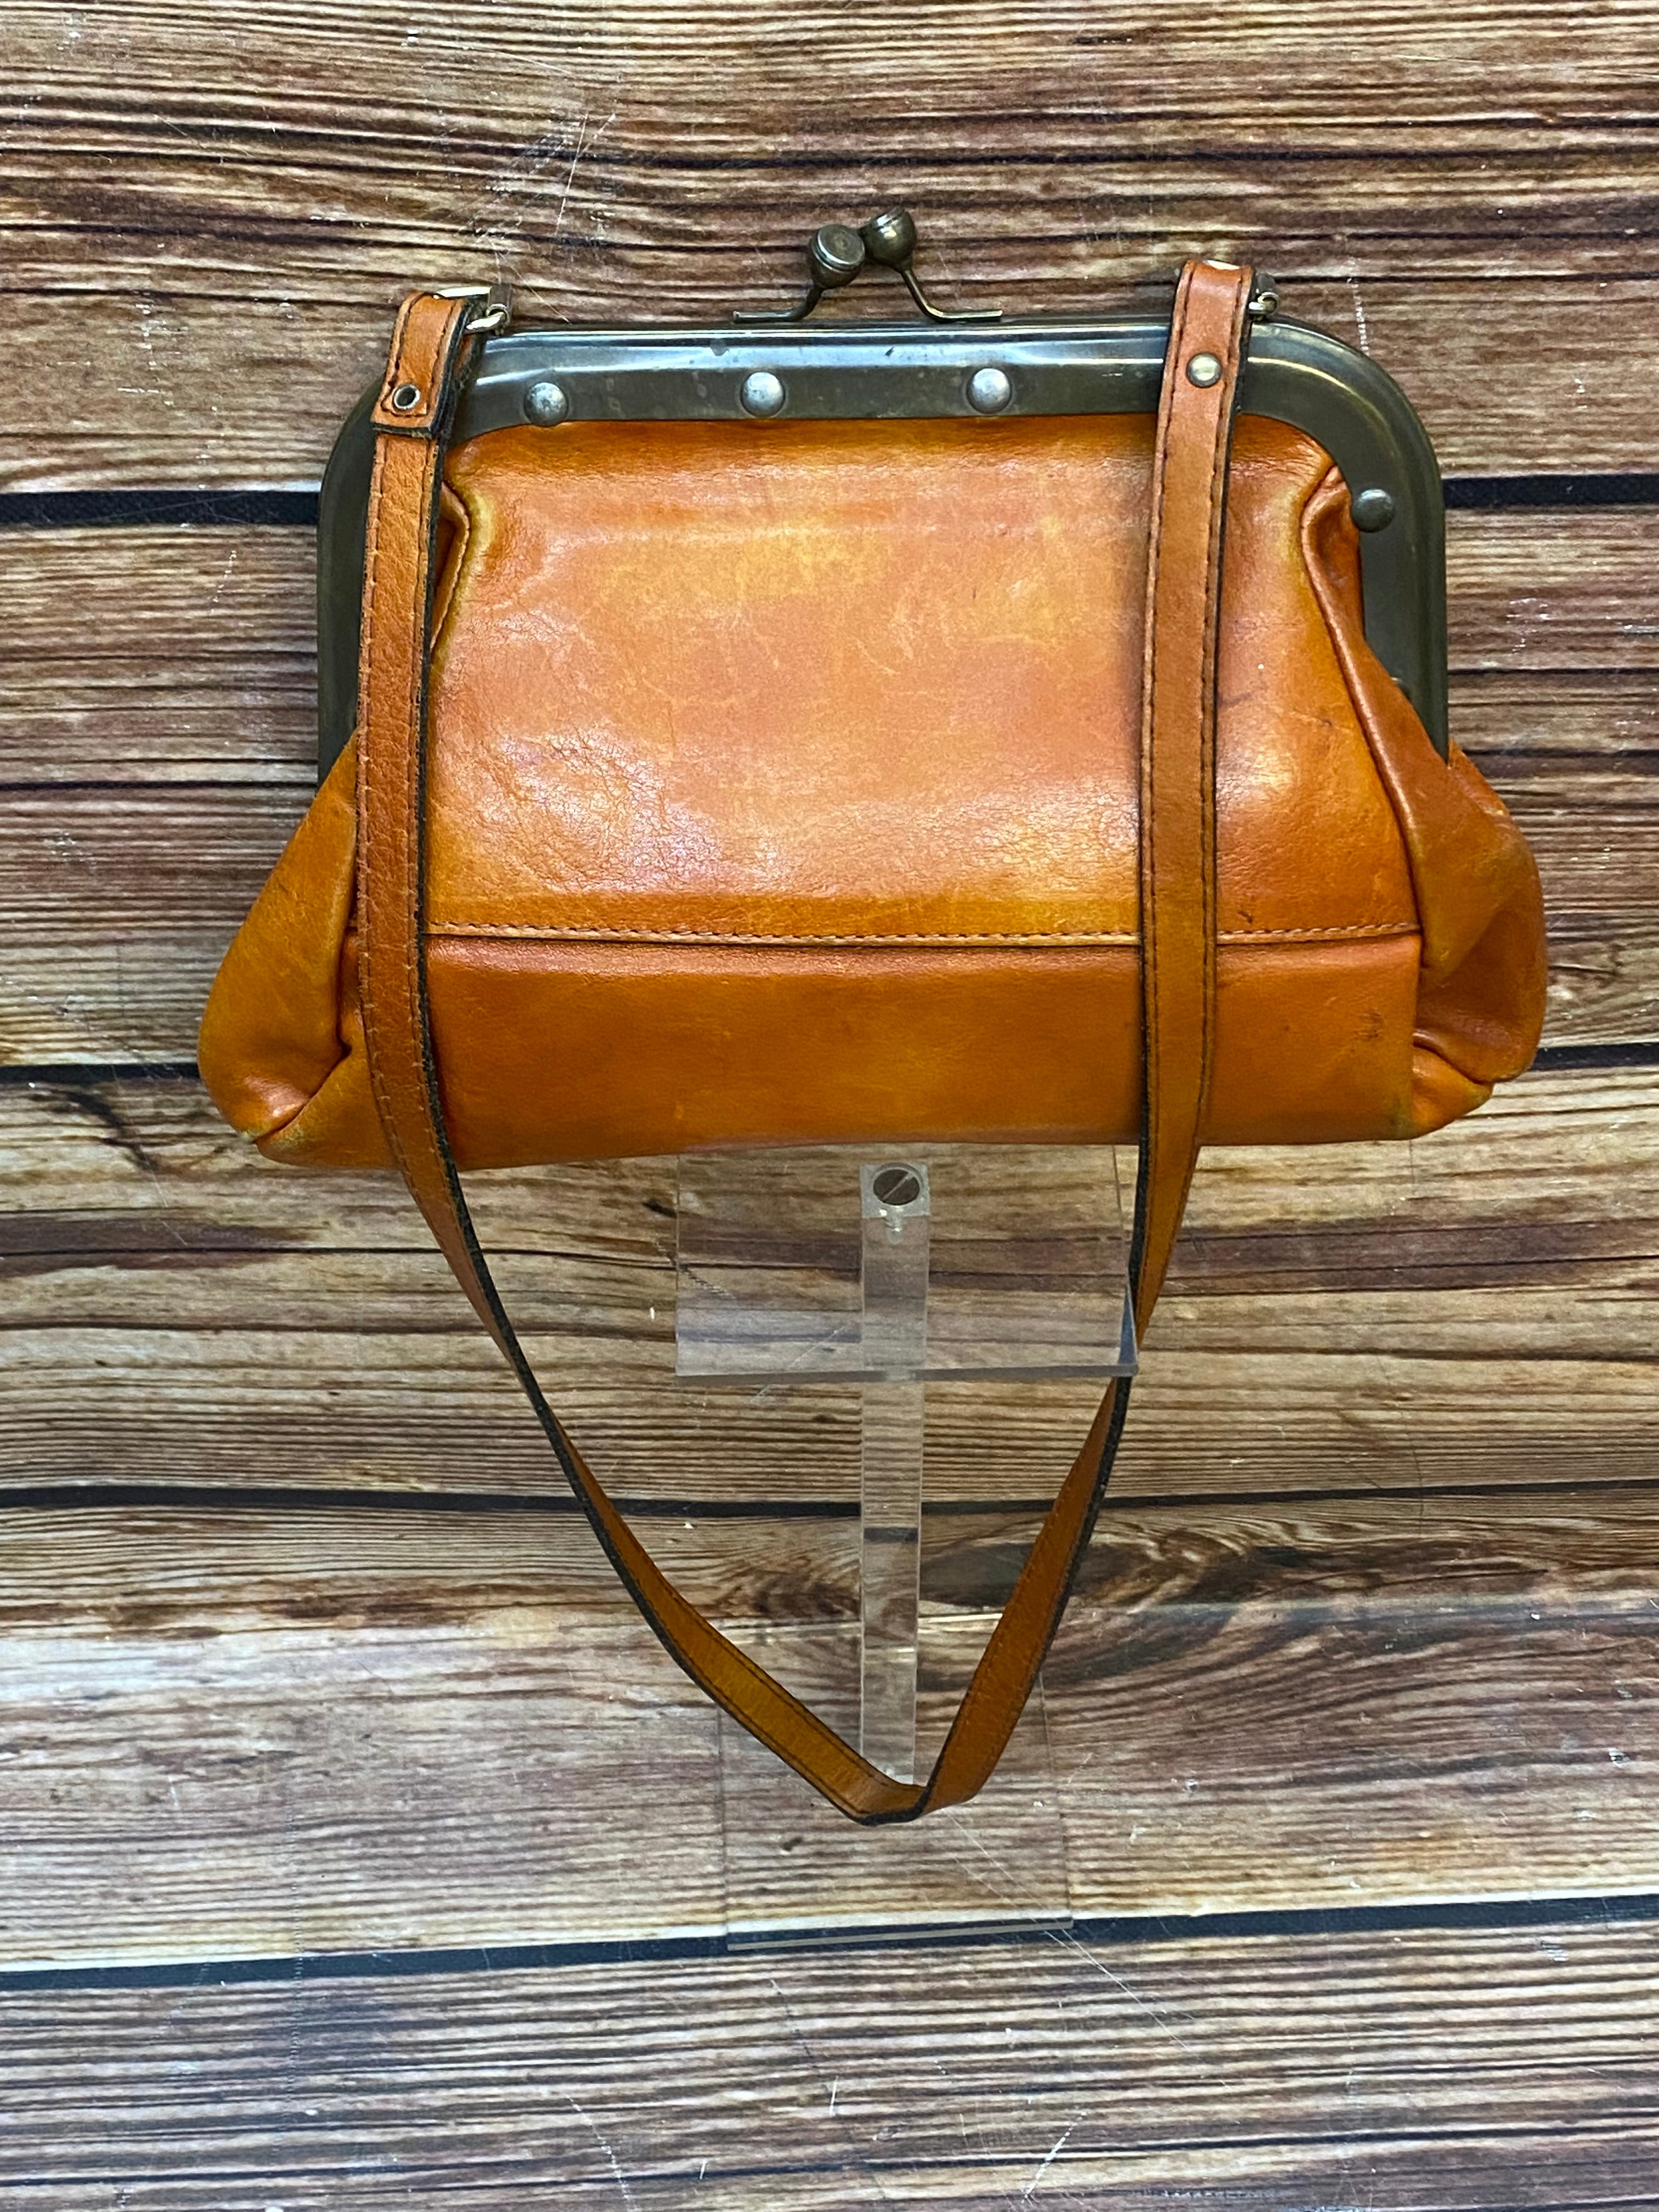 Lederhandtasche Vintage Damen Handtasche, Leder braun, Original